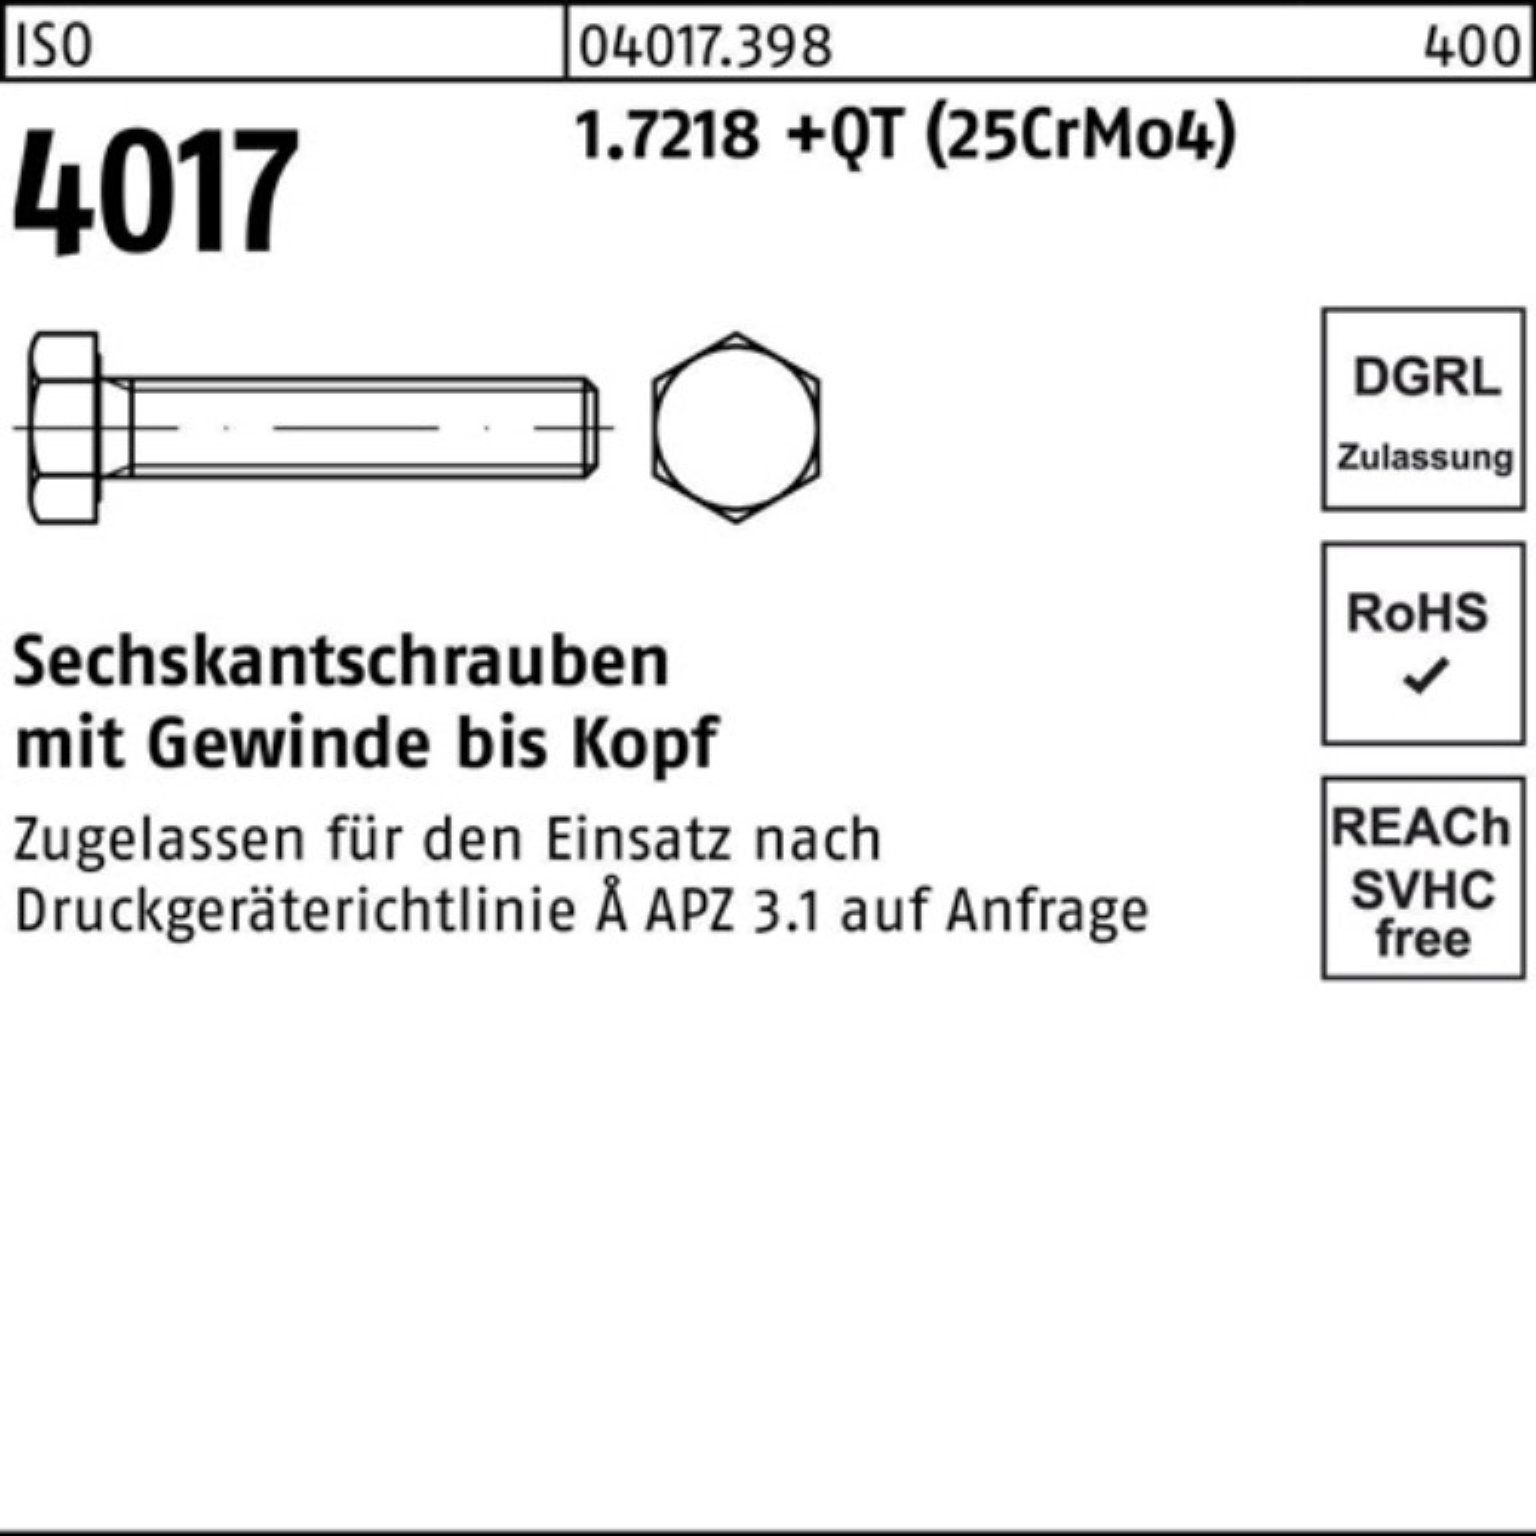 Bufab Sechskantschraube 4017 100 100er Sechskantschraube M33x ISO +QT 1.7218 Pack VG (25CrMo4)